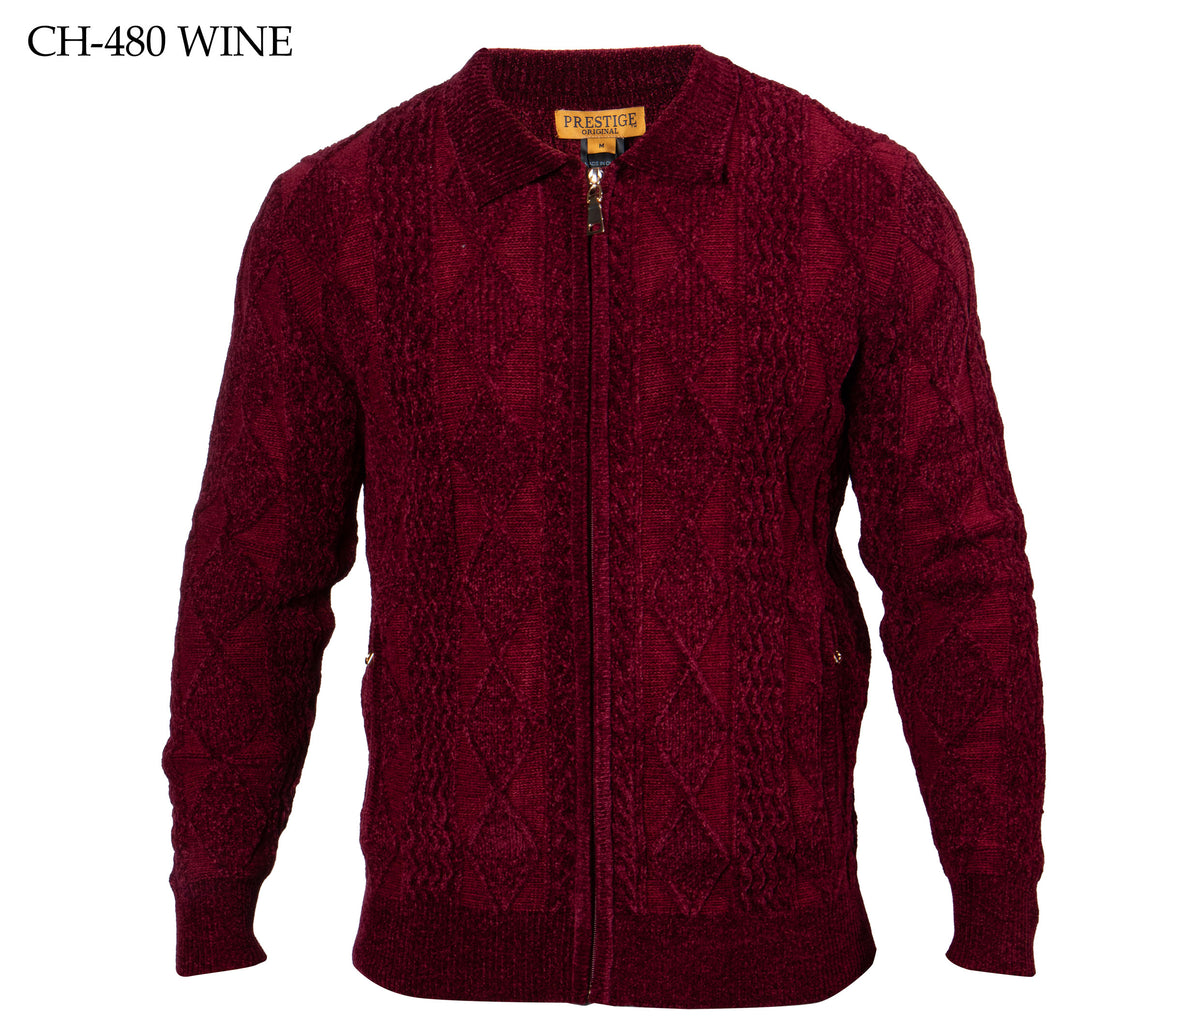 Prestige Wine Knitted Zip Up Sweater - Dudes Boutique